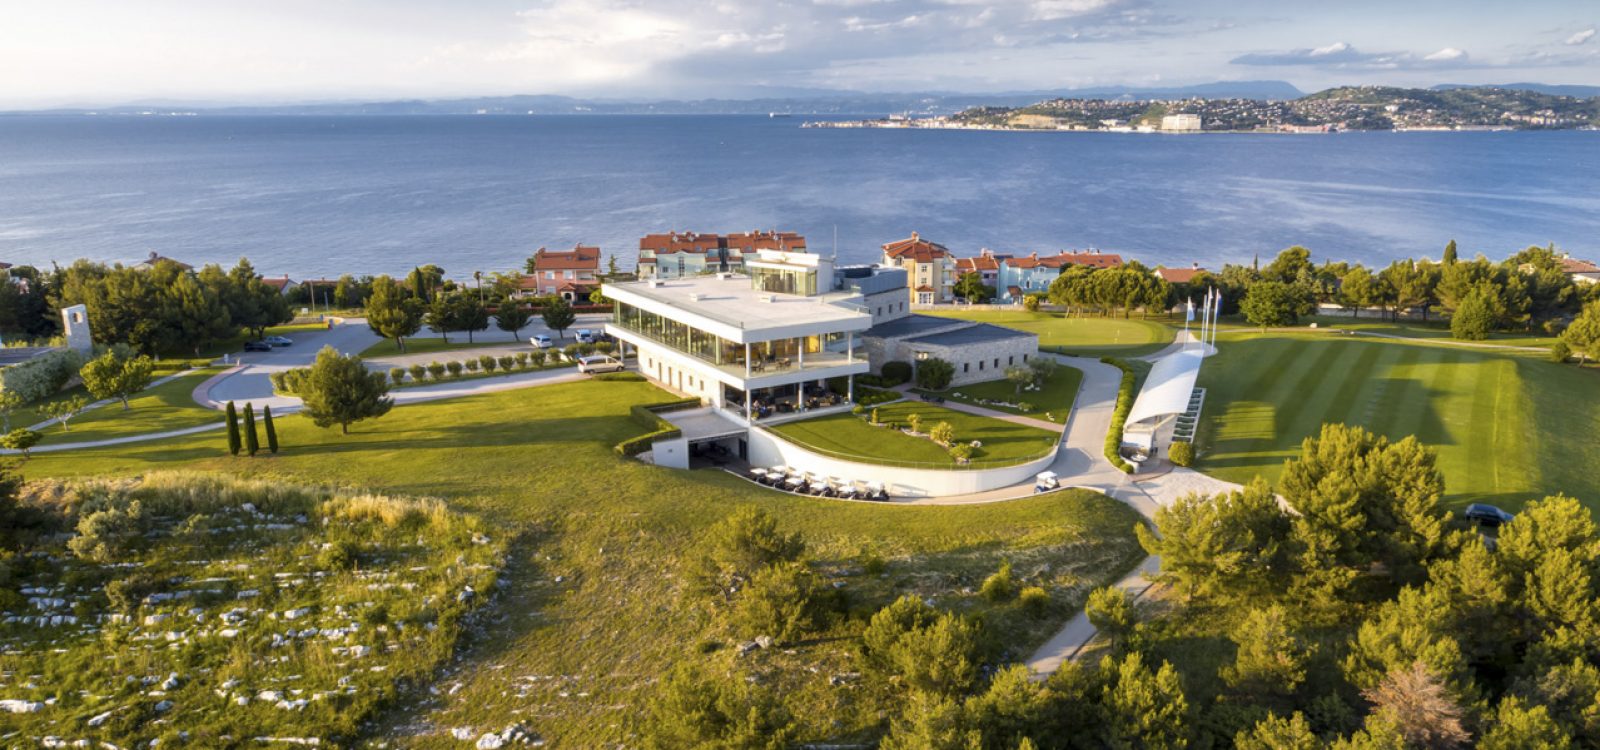 Kempinski Hotel Adriatic_golf adriatic clubhouse-WEB